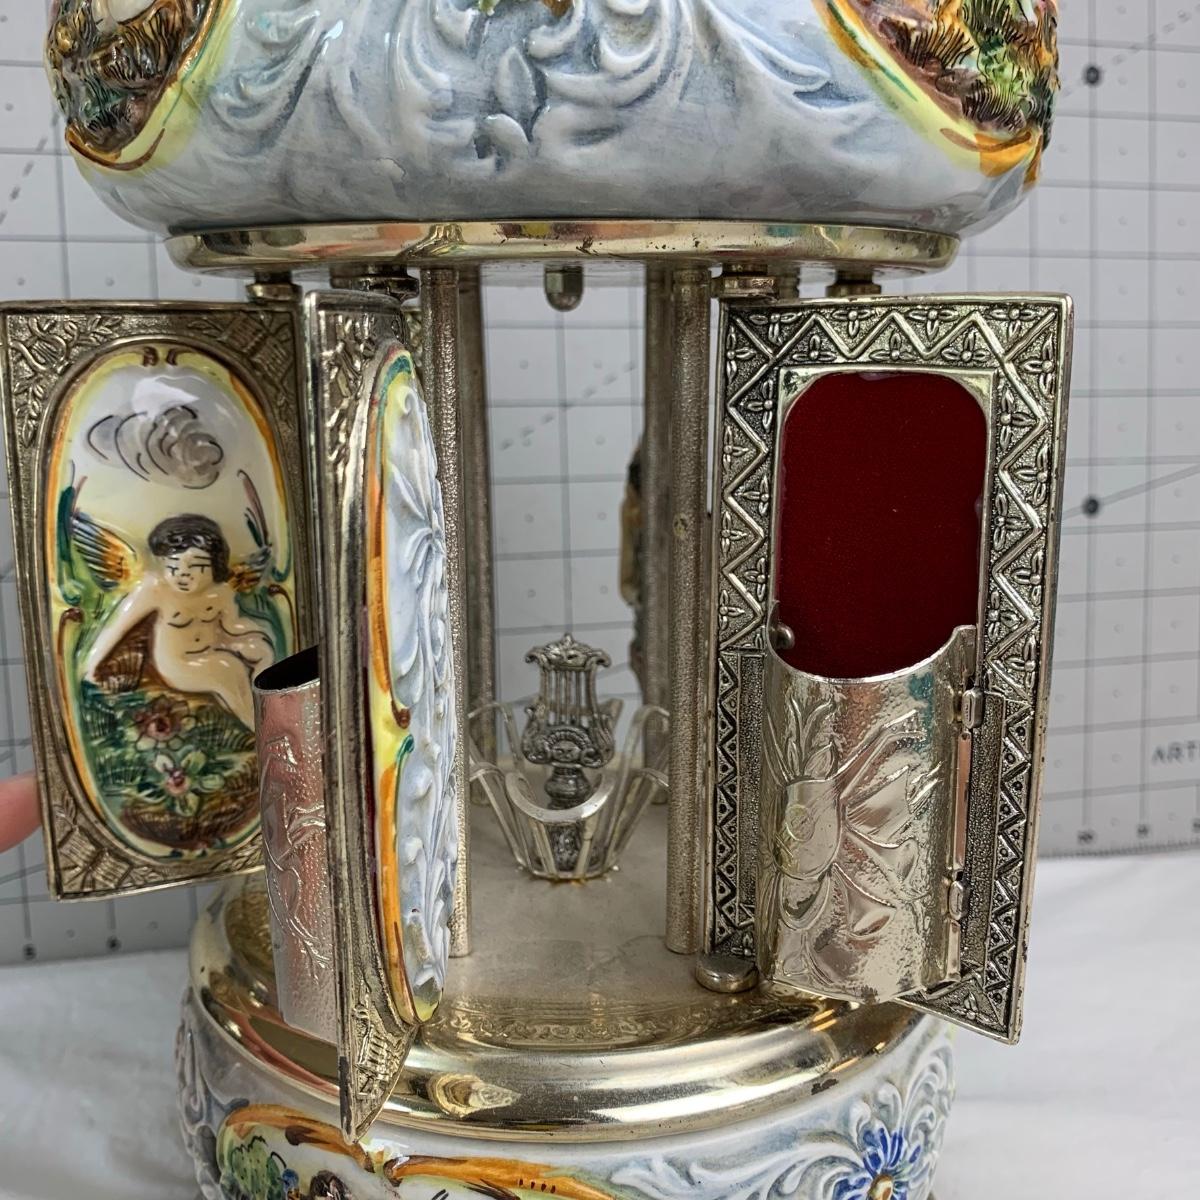 Sold at Auction: Vintage Reuge Swiss Music Box Lipstick Holder